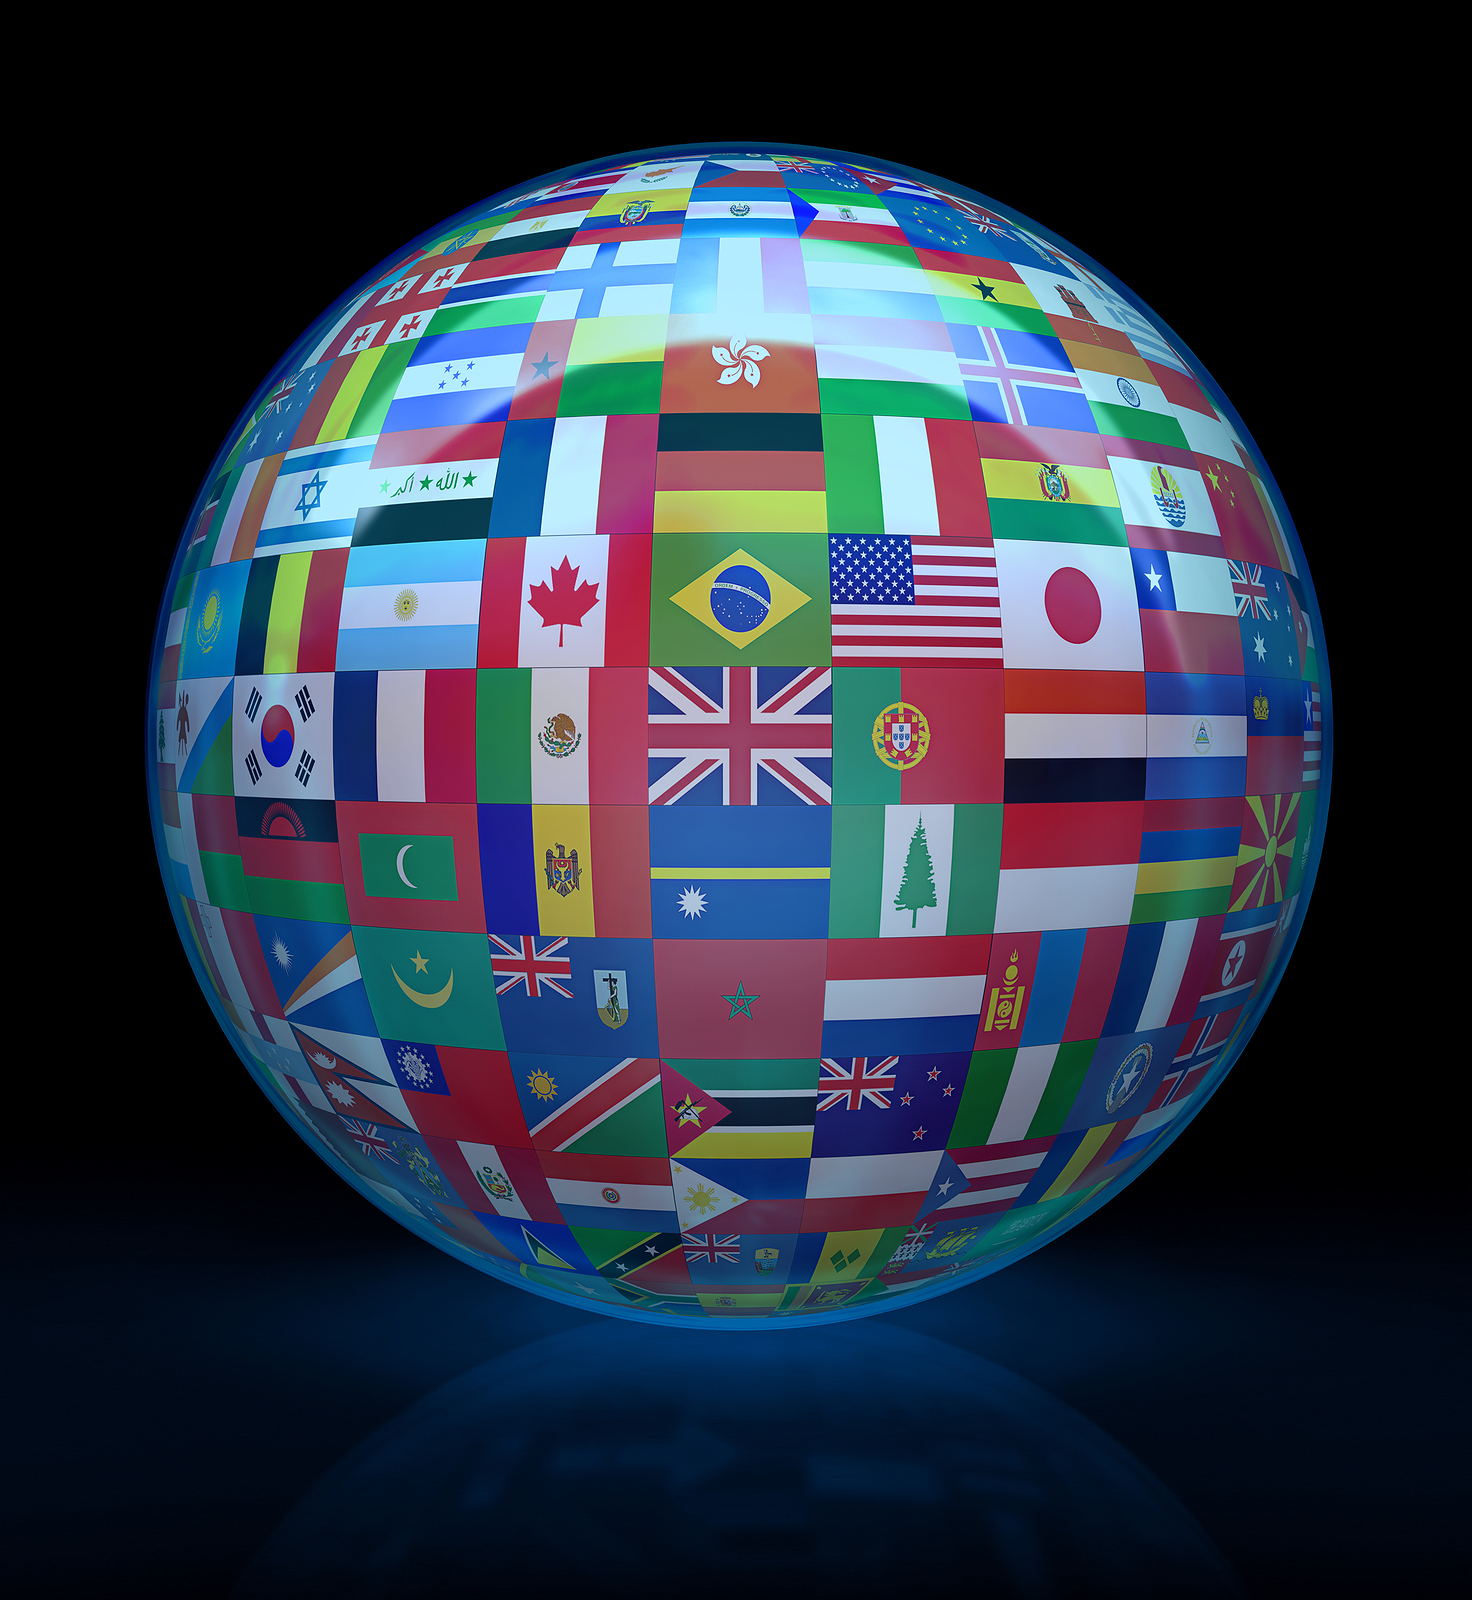 http://globalfplc.files.wordpress.com/2010/12/bigstock_the_glass_globe_with_flags_of__20952433.jpg